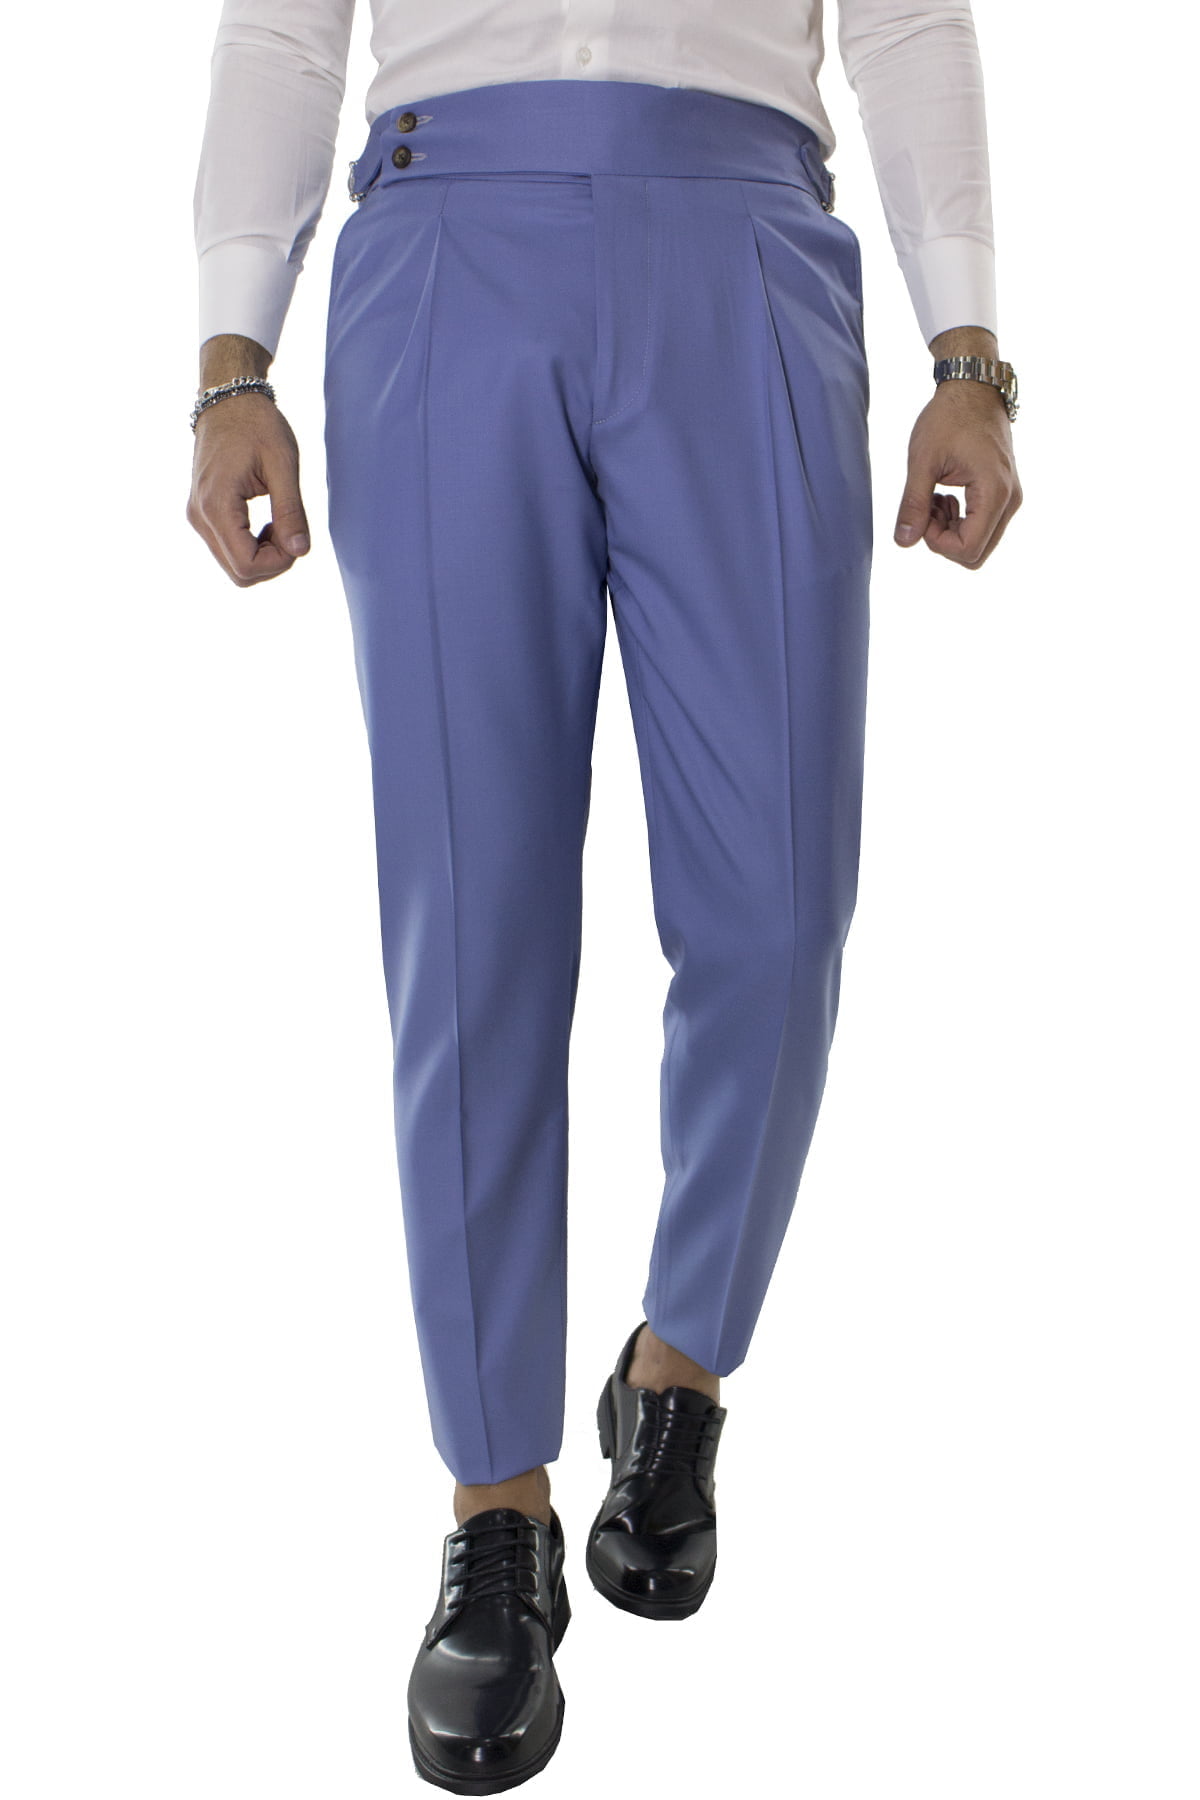 Pantalone uomo celeste in fresco lana super140s vita alta con pinces e fibbie laterali Holland & Sherry